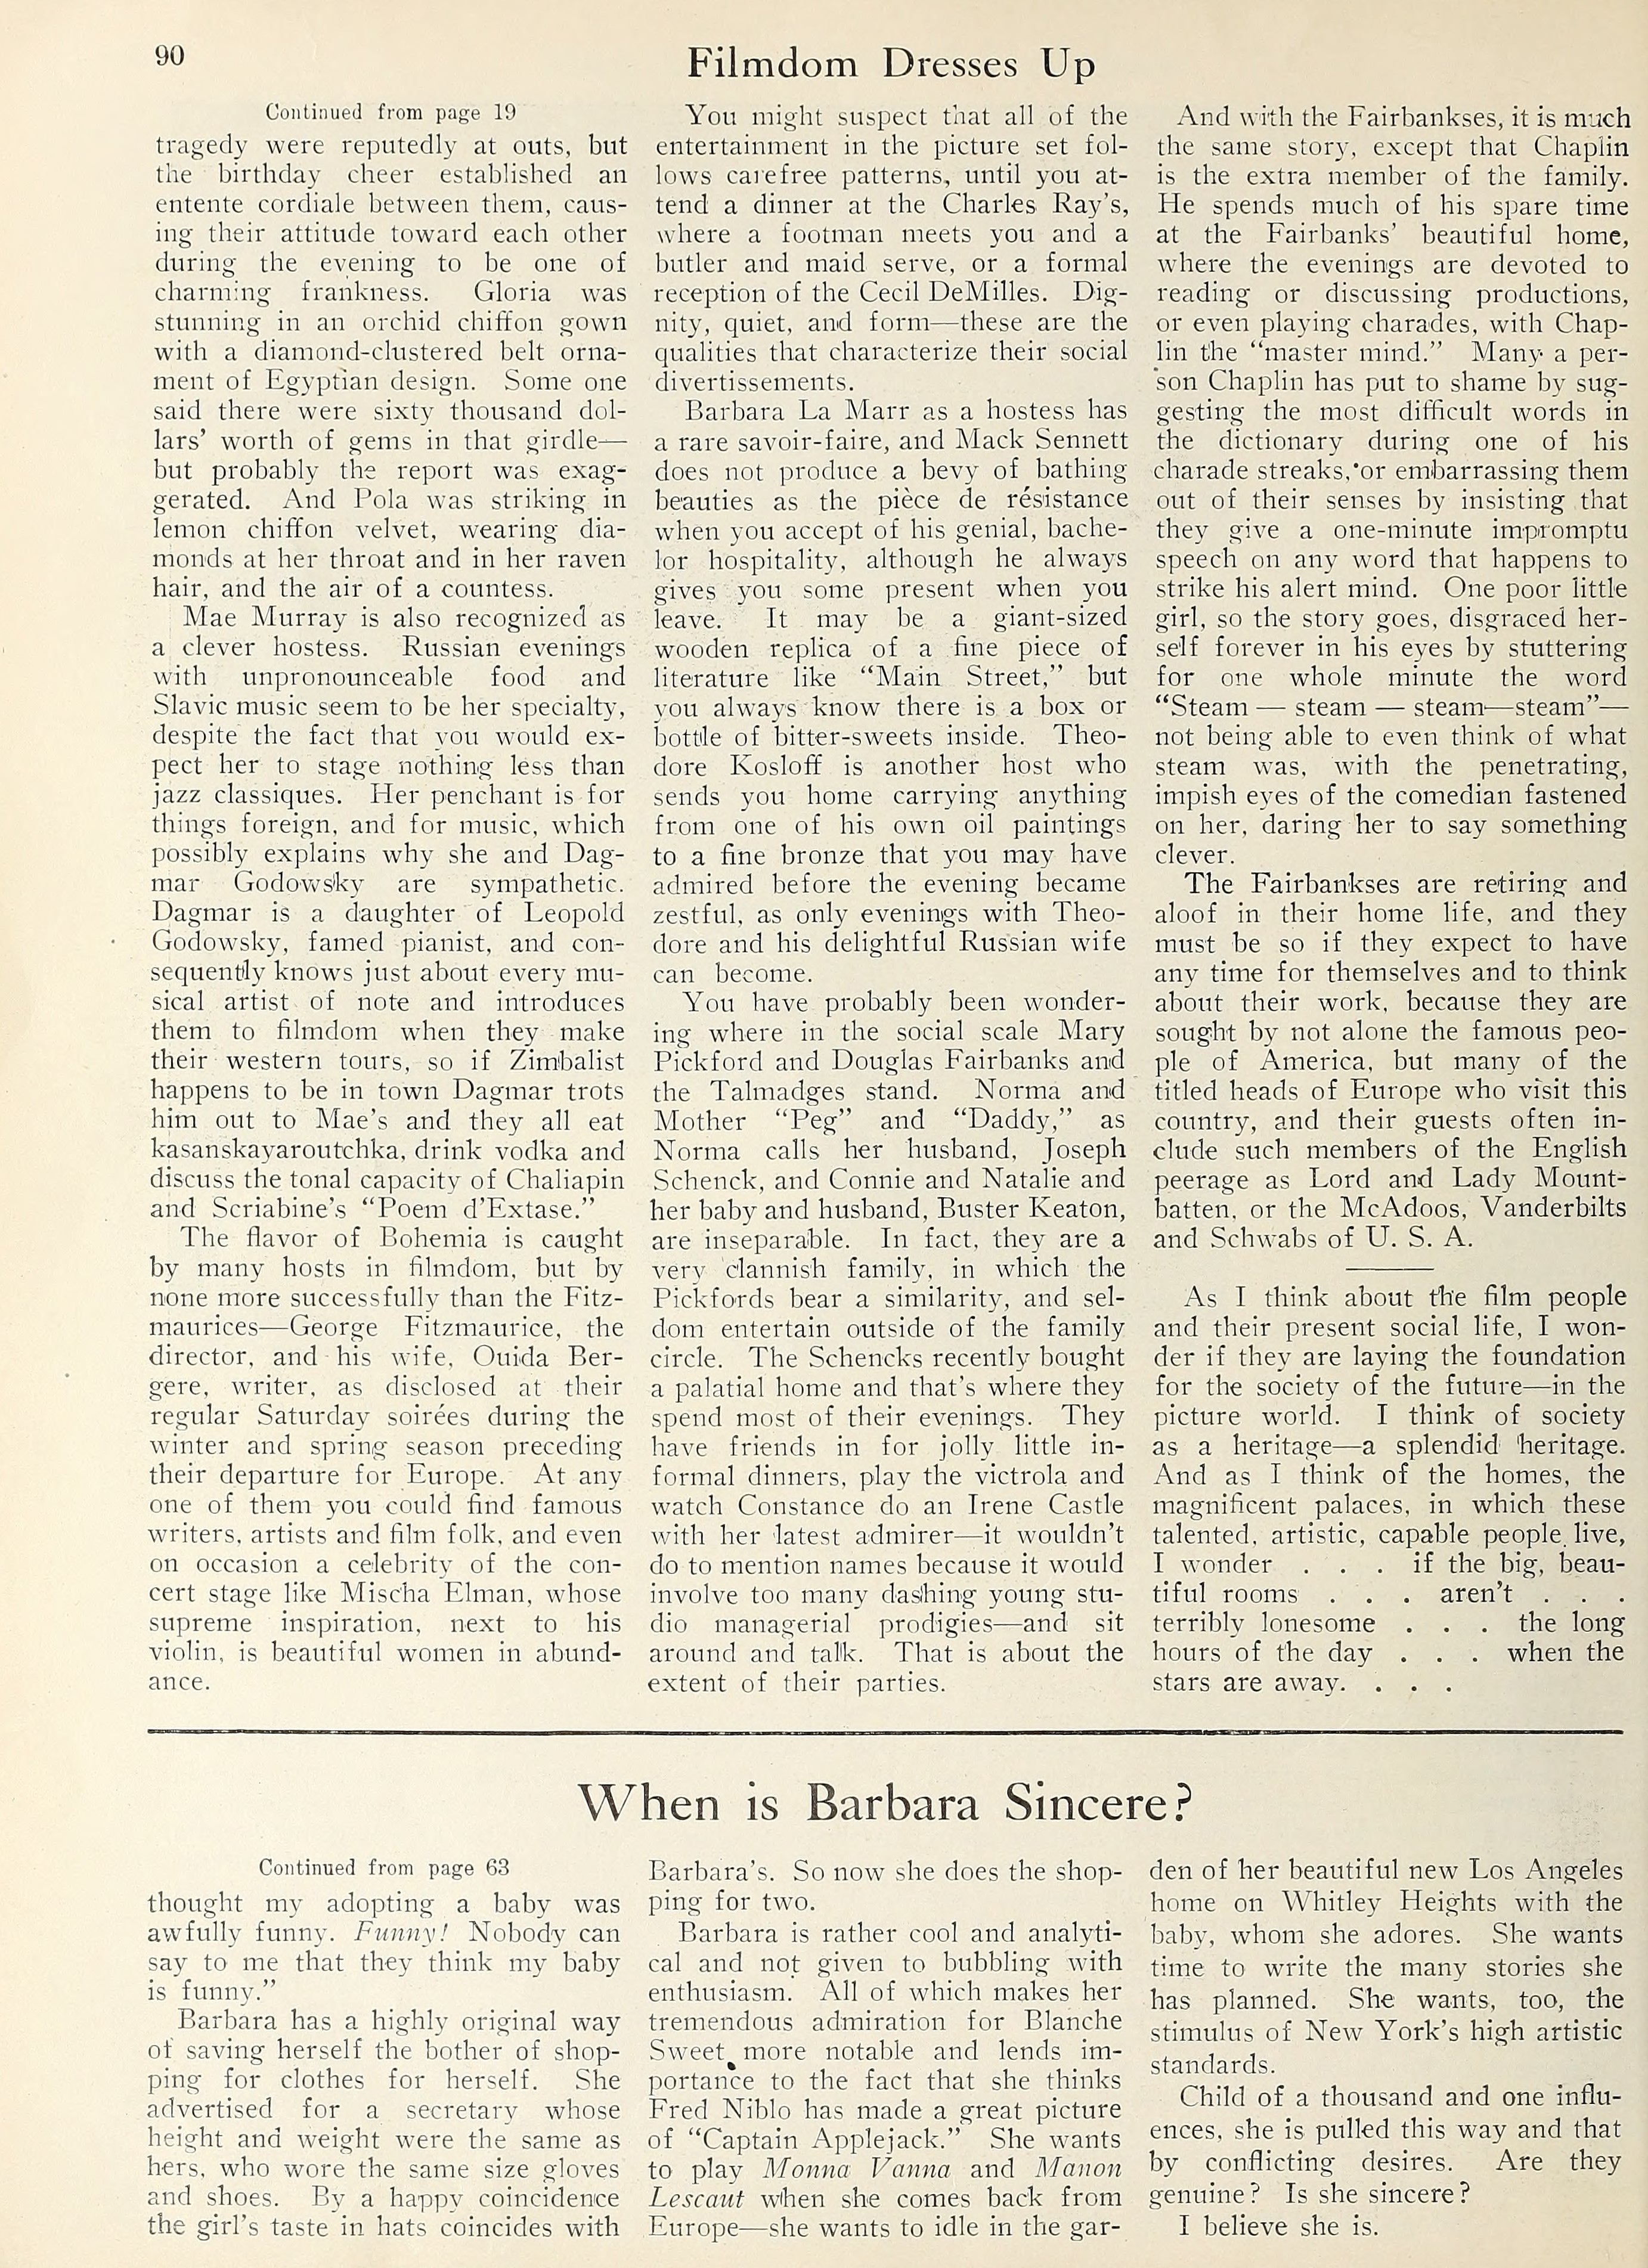 Filmdom Dresses Up | Barbara La Marr — When is Barbara Sincere? | 1923 | www.vintoz.com